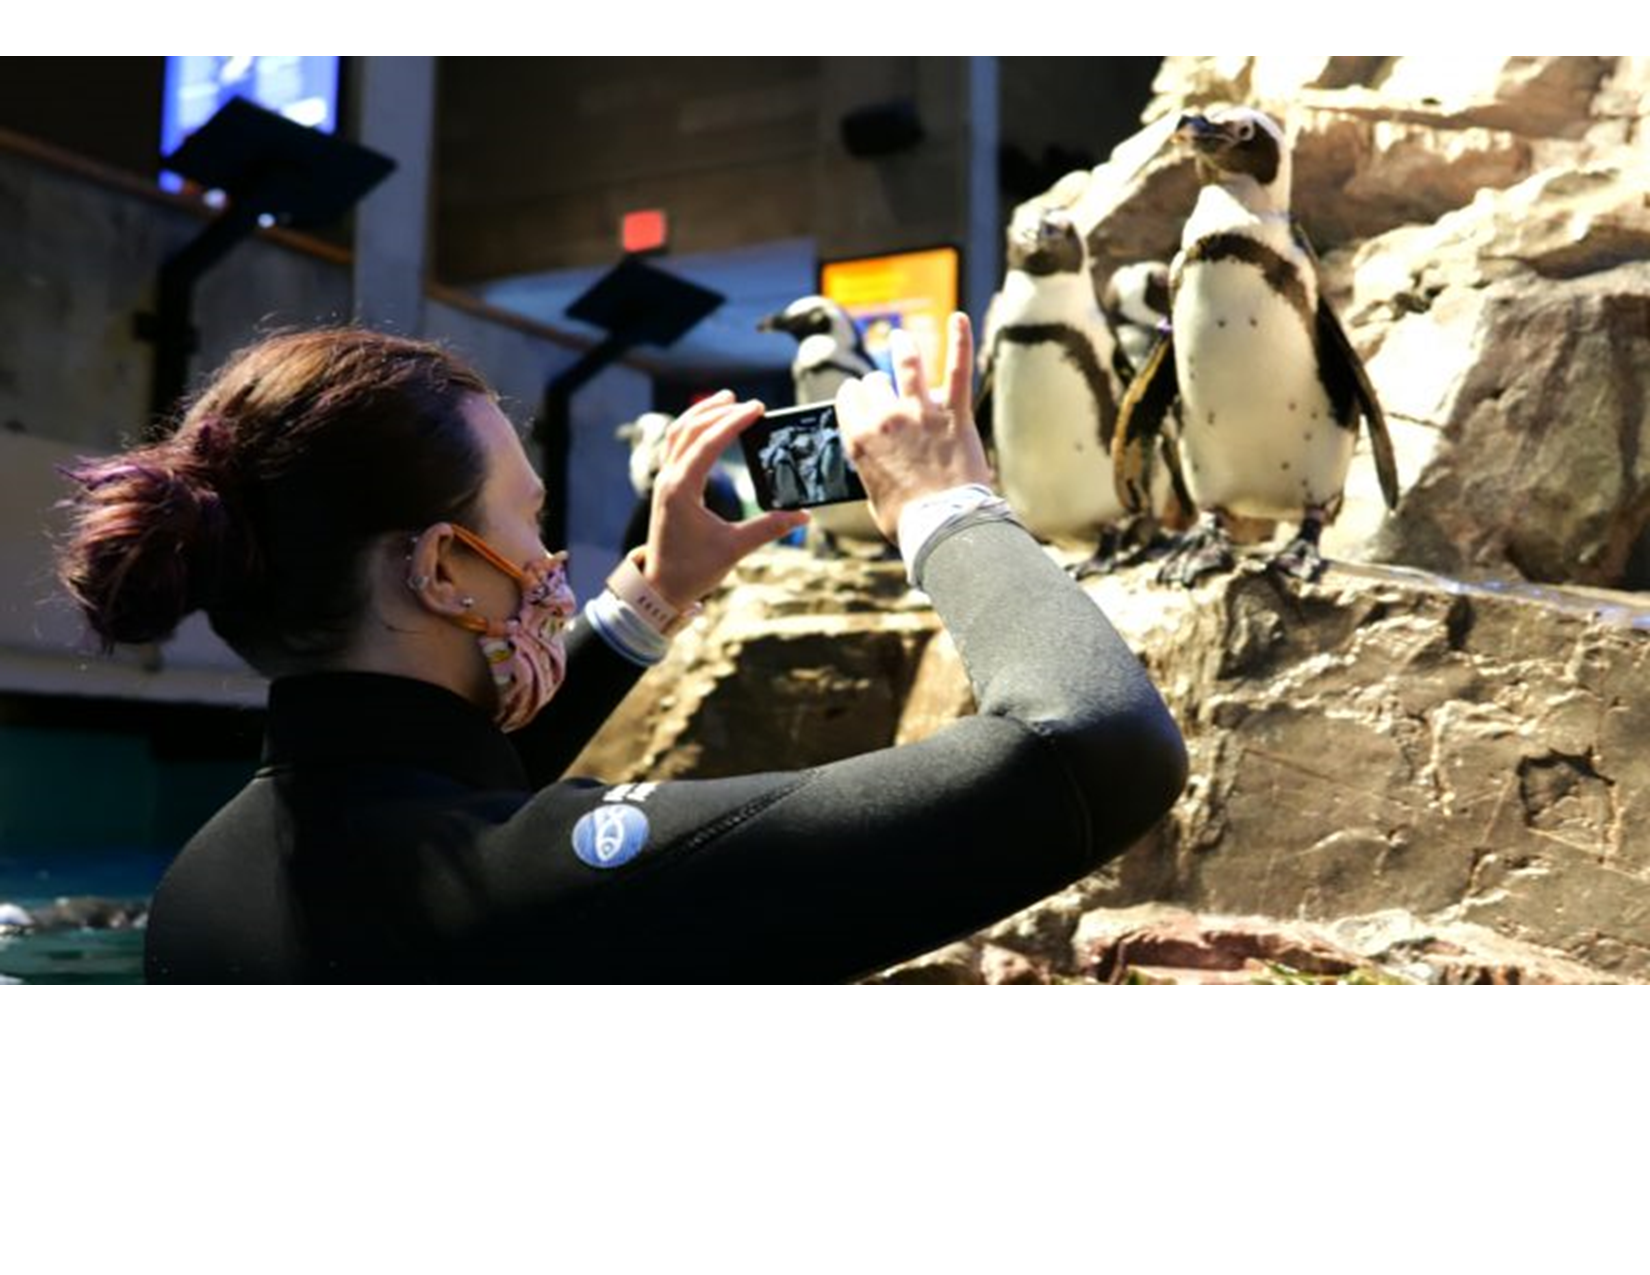 Penguin encounter